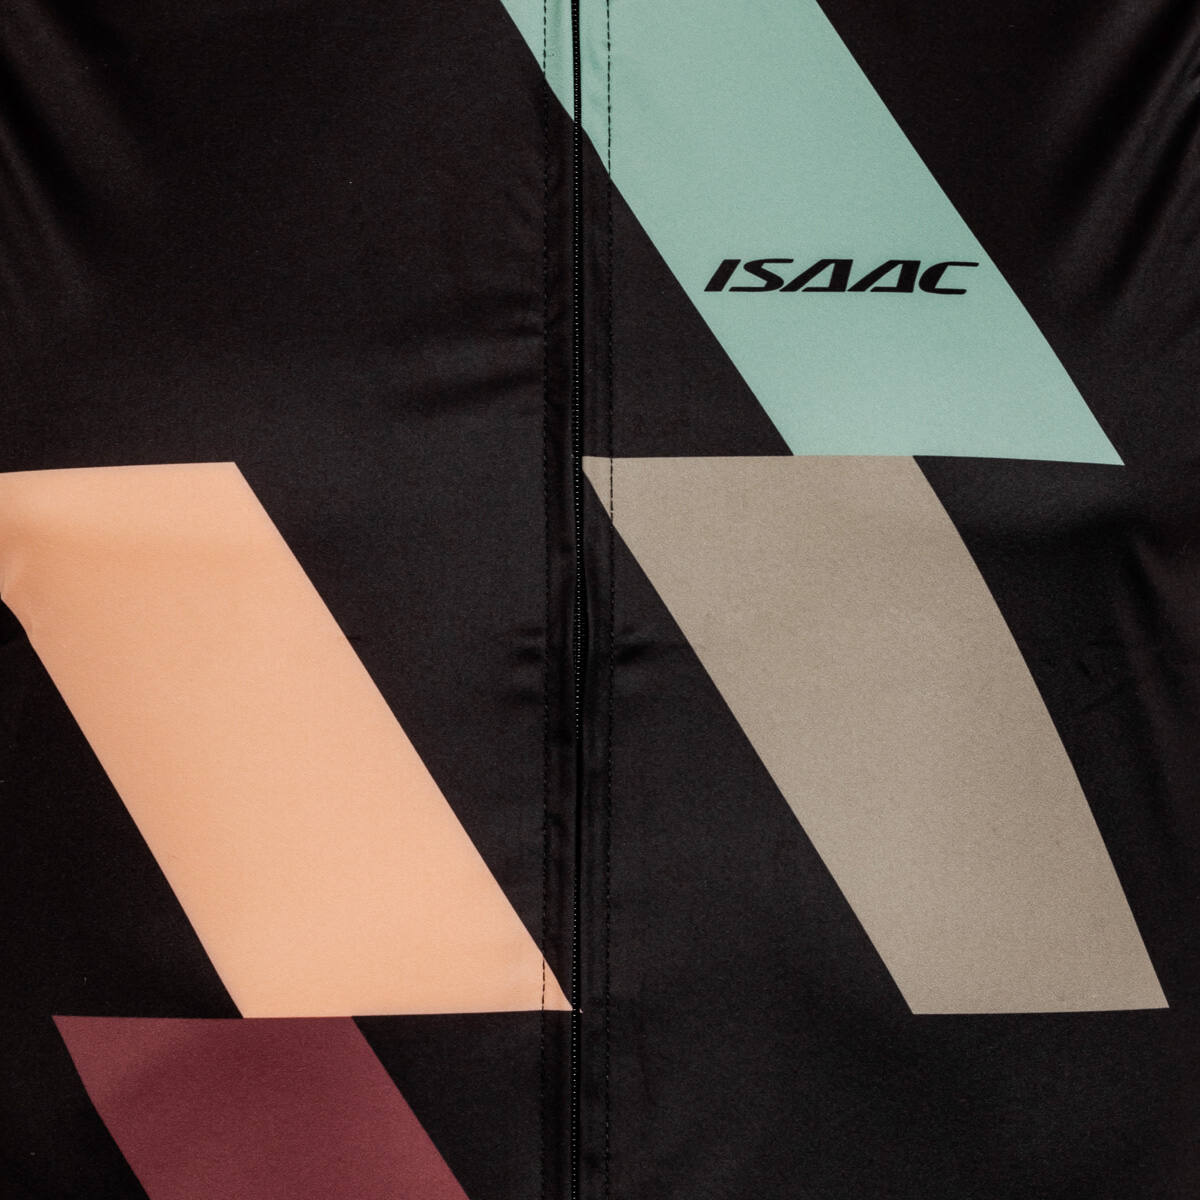 Isaac - Windjacket Teamwear size XS